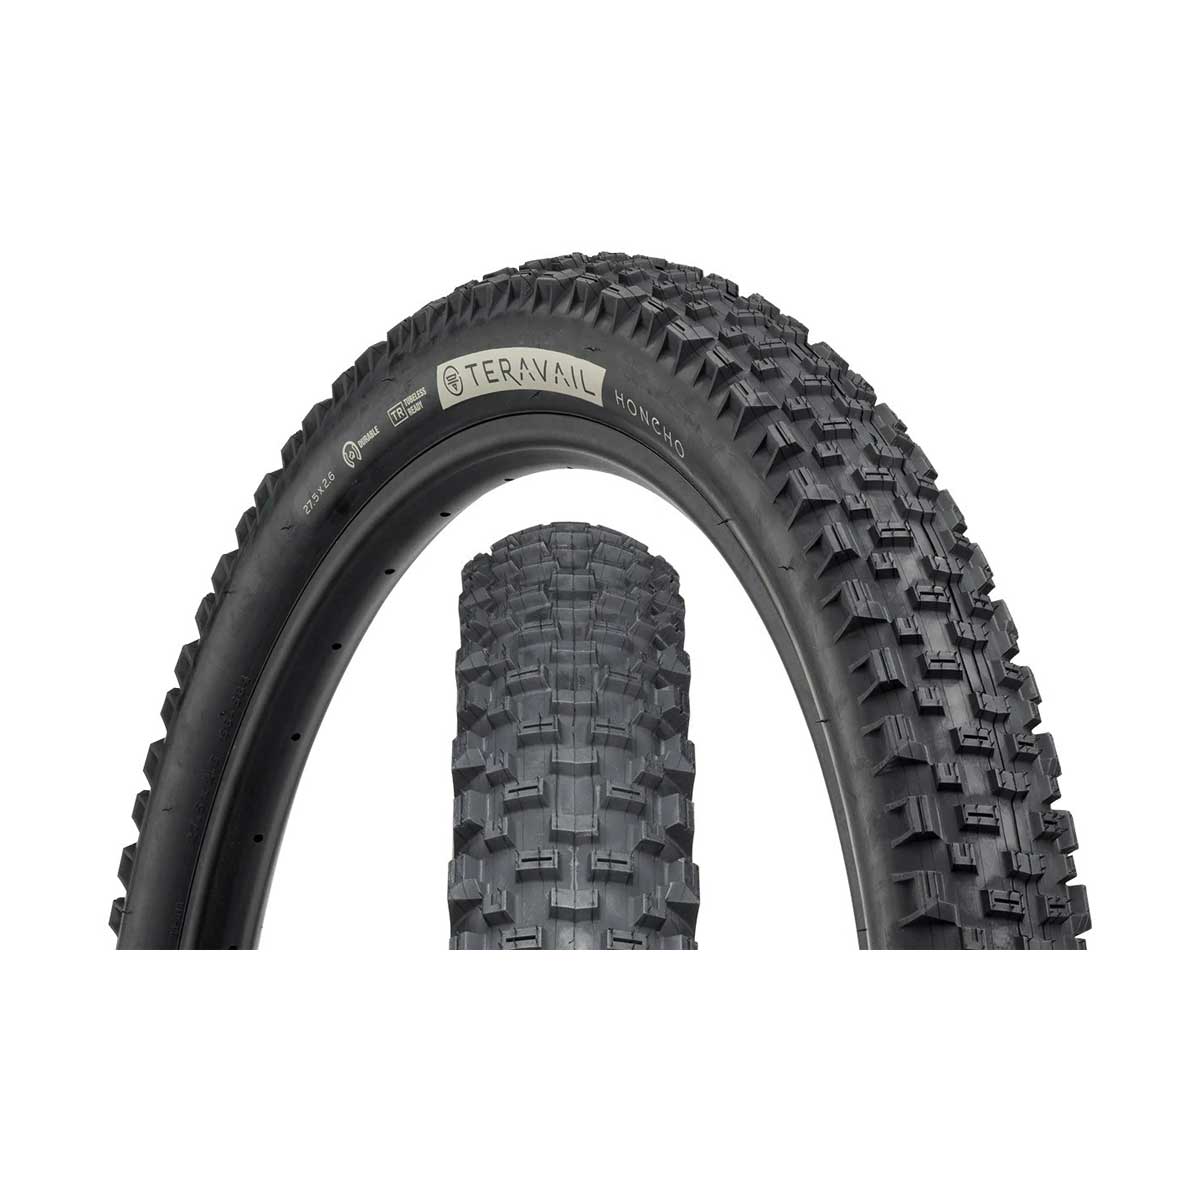 Teravail Honcho Mountain Bike Tyre - Durable